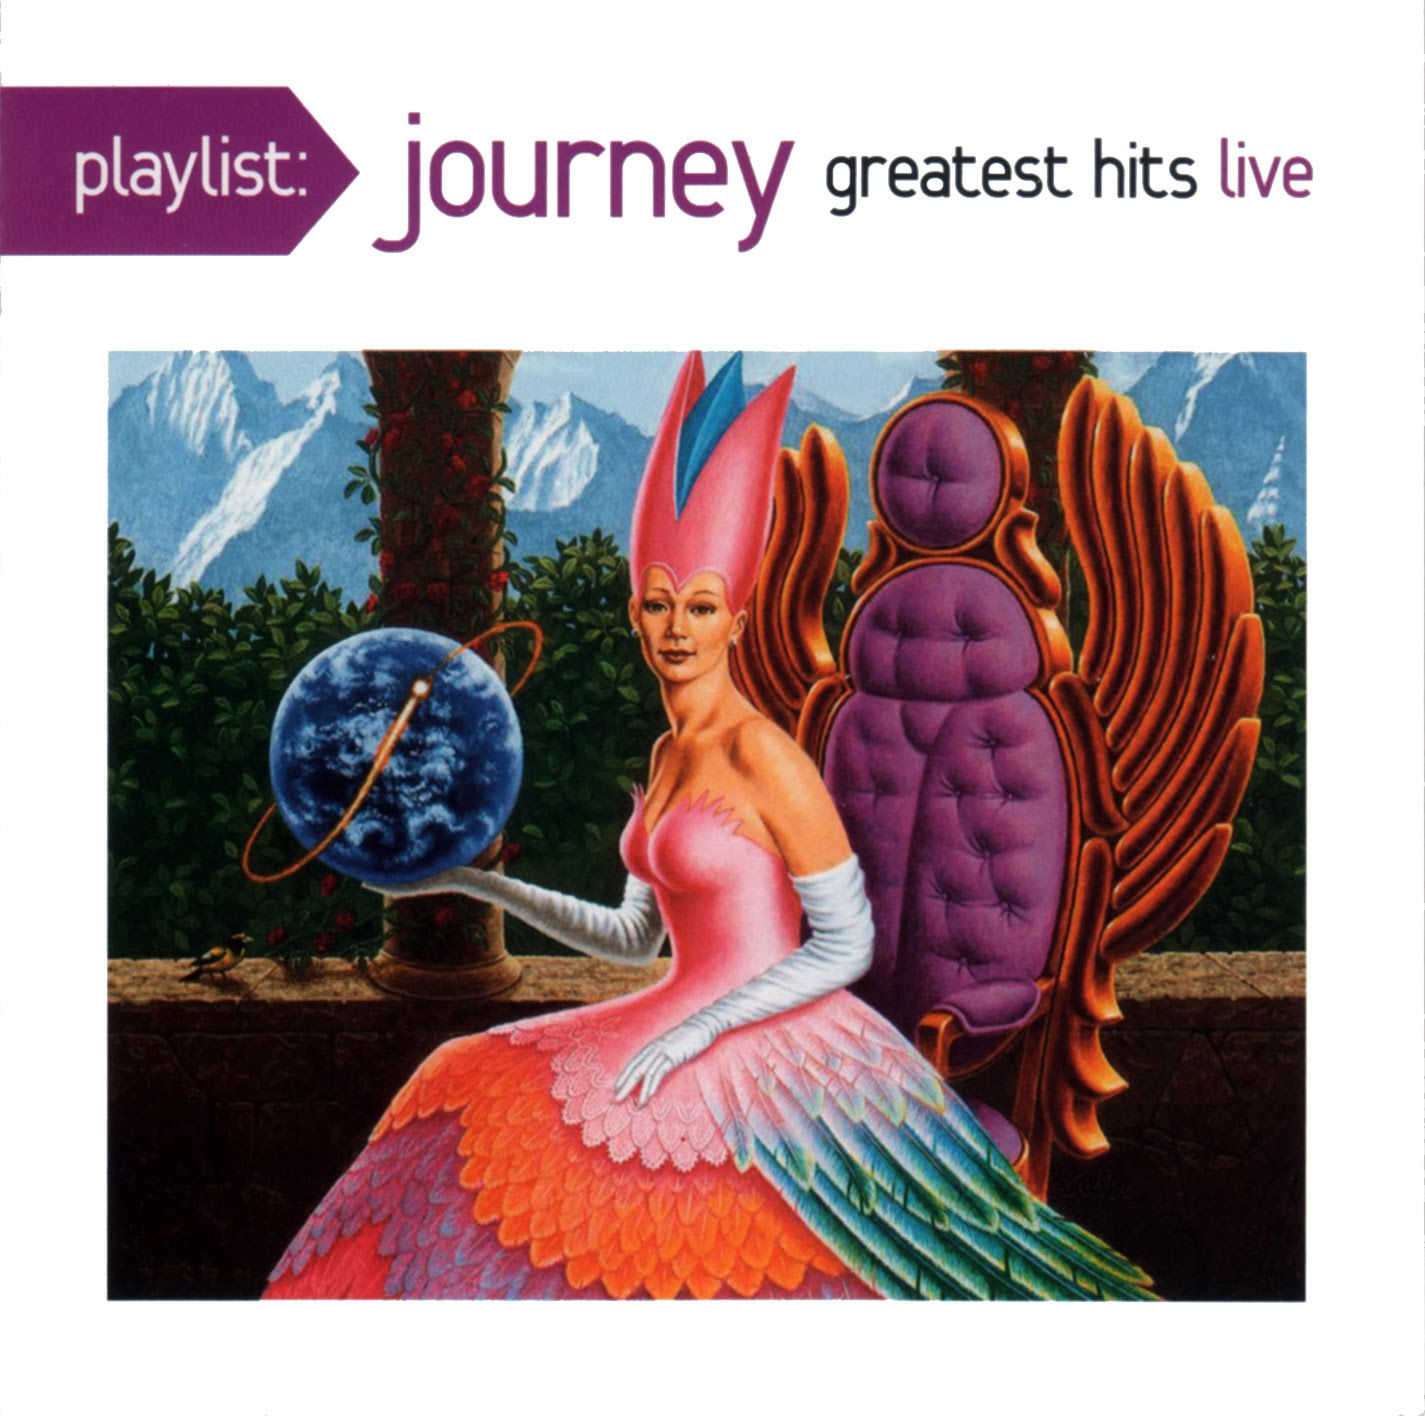 Live journey. Greatest Hits Live Journey. Hit Live. Journey Greatest Hits [Remastered]. Journey - Greatest Hits i & II.